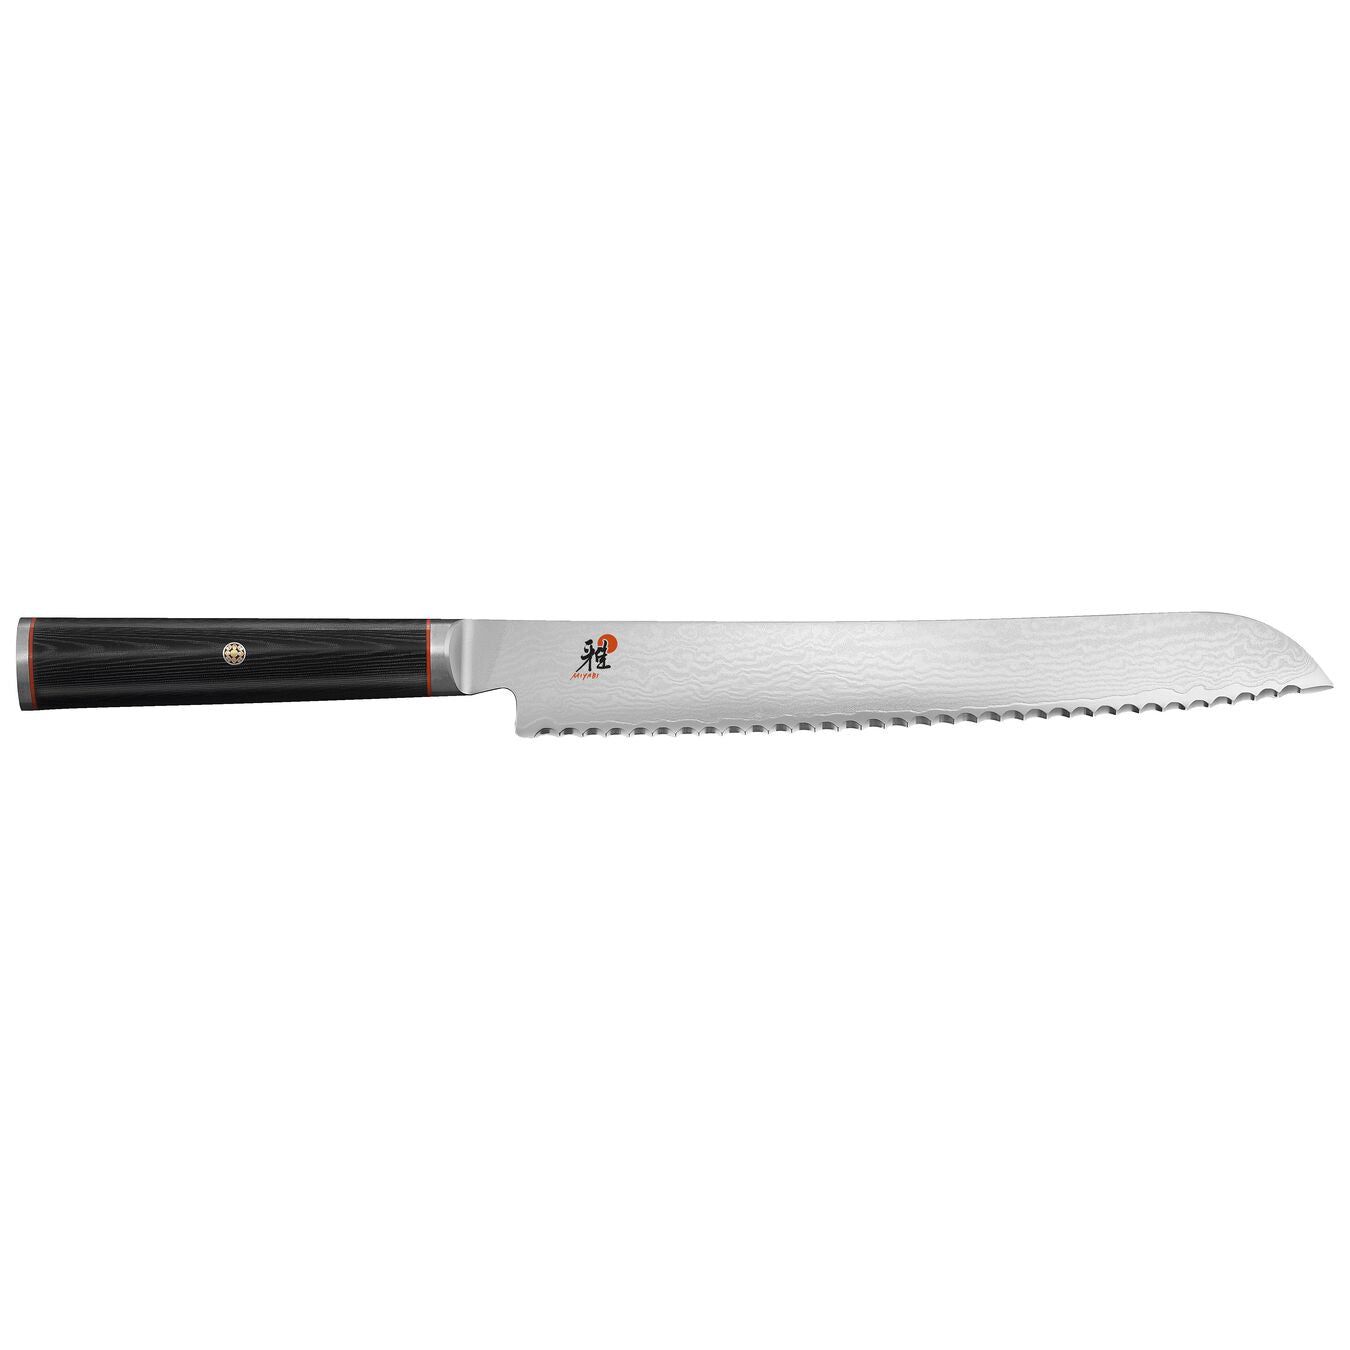 34186-231 miyabi kaizen bread knife